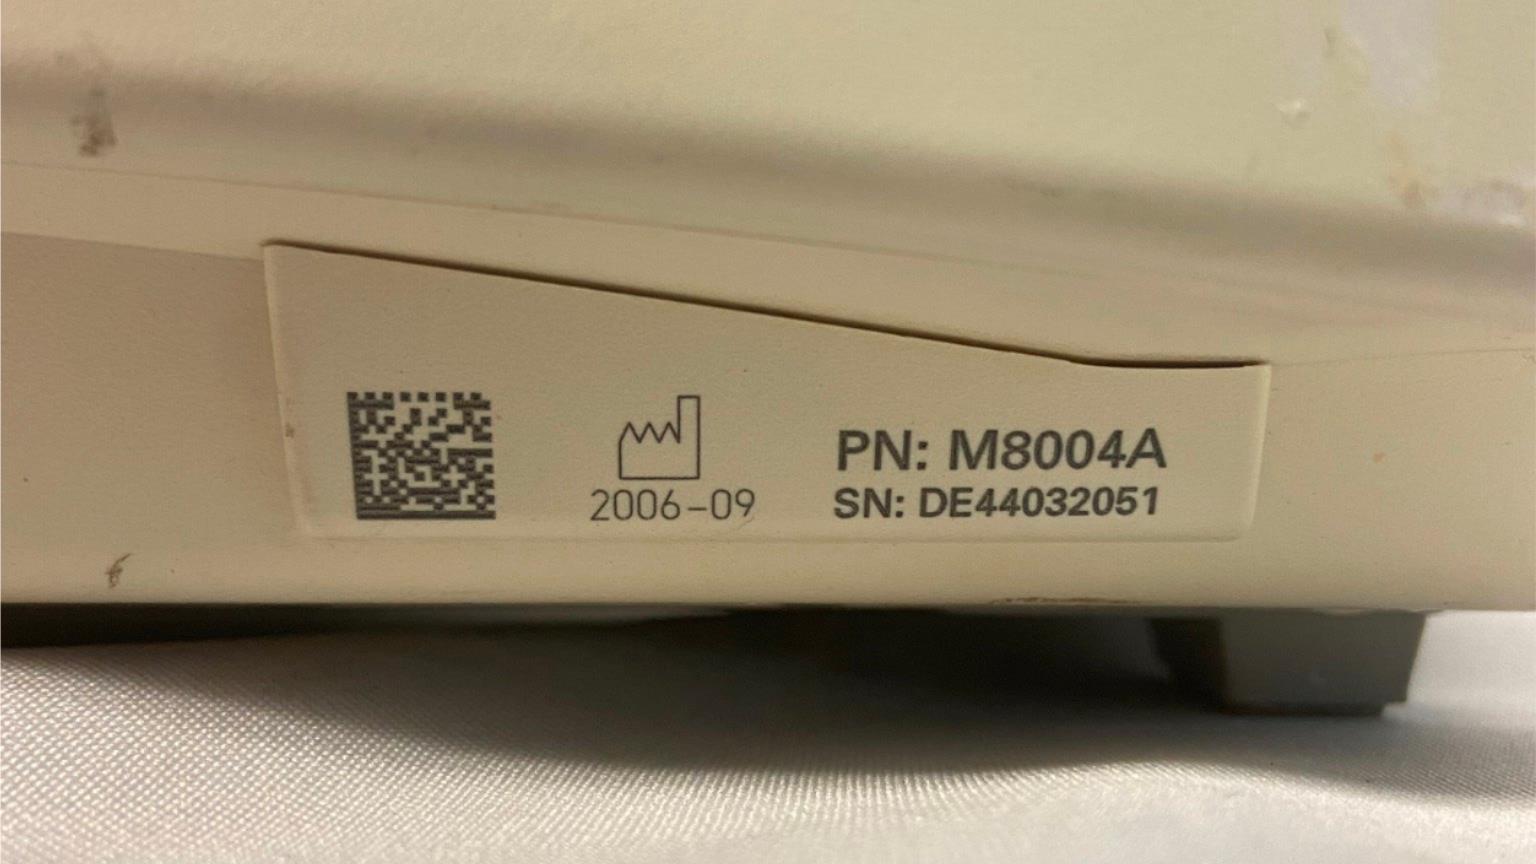 Philips MP30 IntelliVue Patient Monitor PM8004A. SN:DE44032051 DIAGNOSTIC ULTRASOUND MACHINES FOR SALE